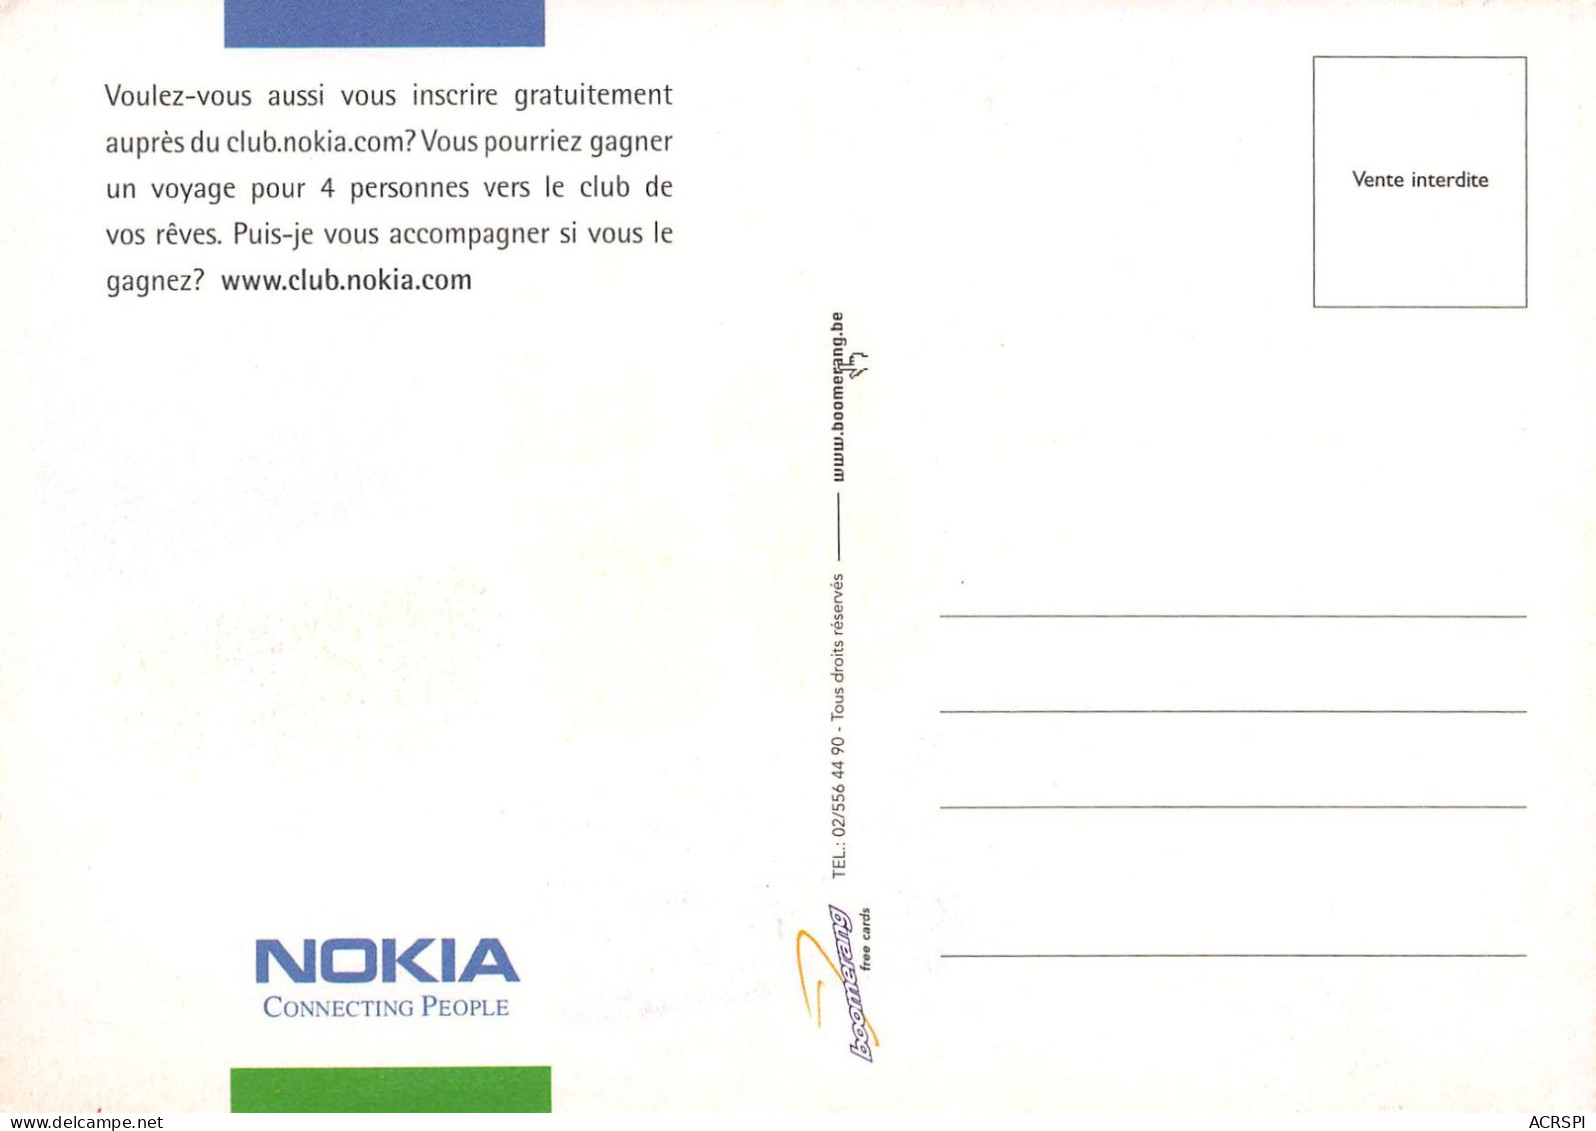 Nokia Mobile OY Finlande Multinationale De Télécommunications Téléphone  Boomerang  (scanR/V)   N° 67 \MR8005 - Finland